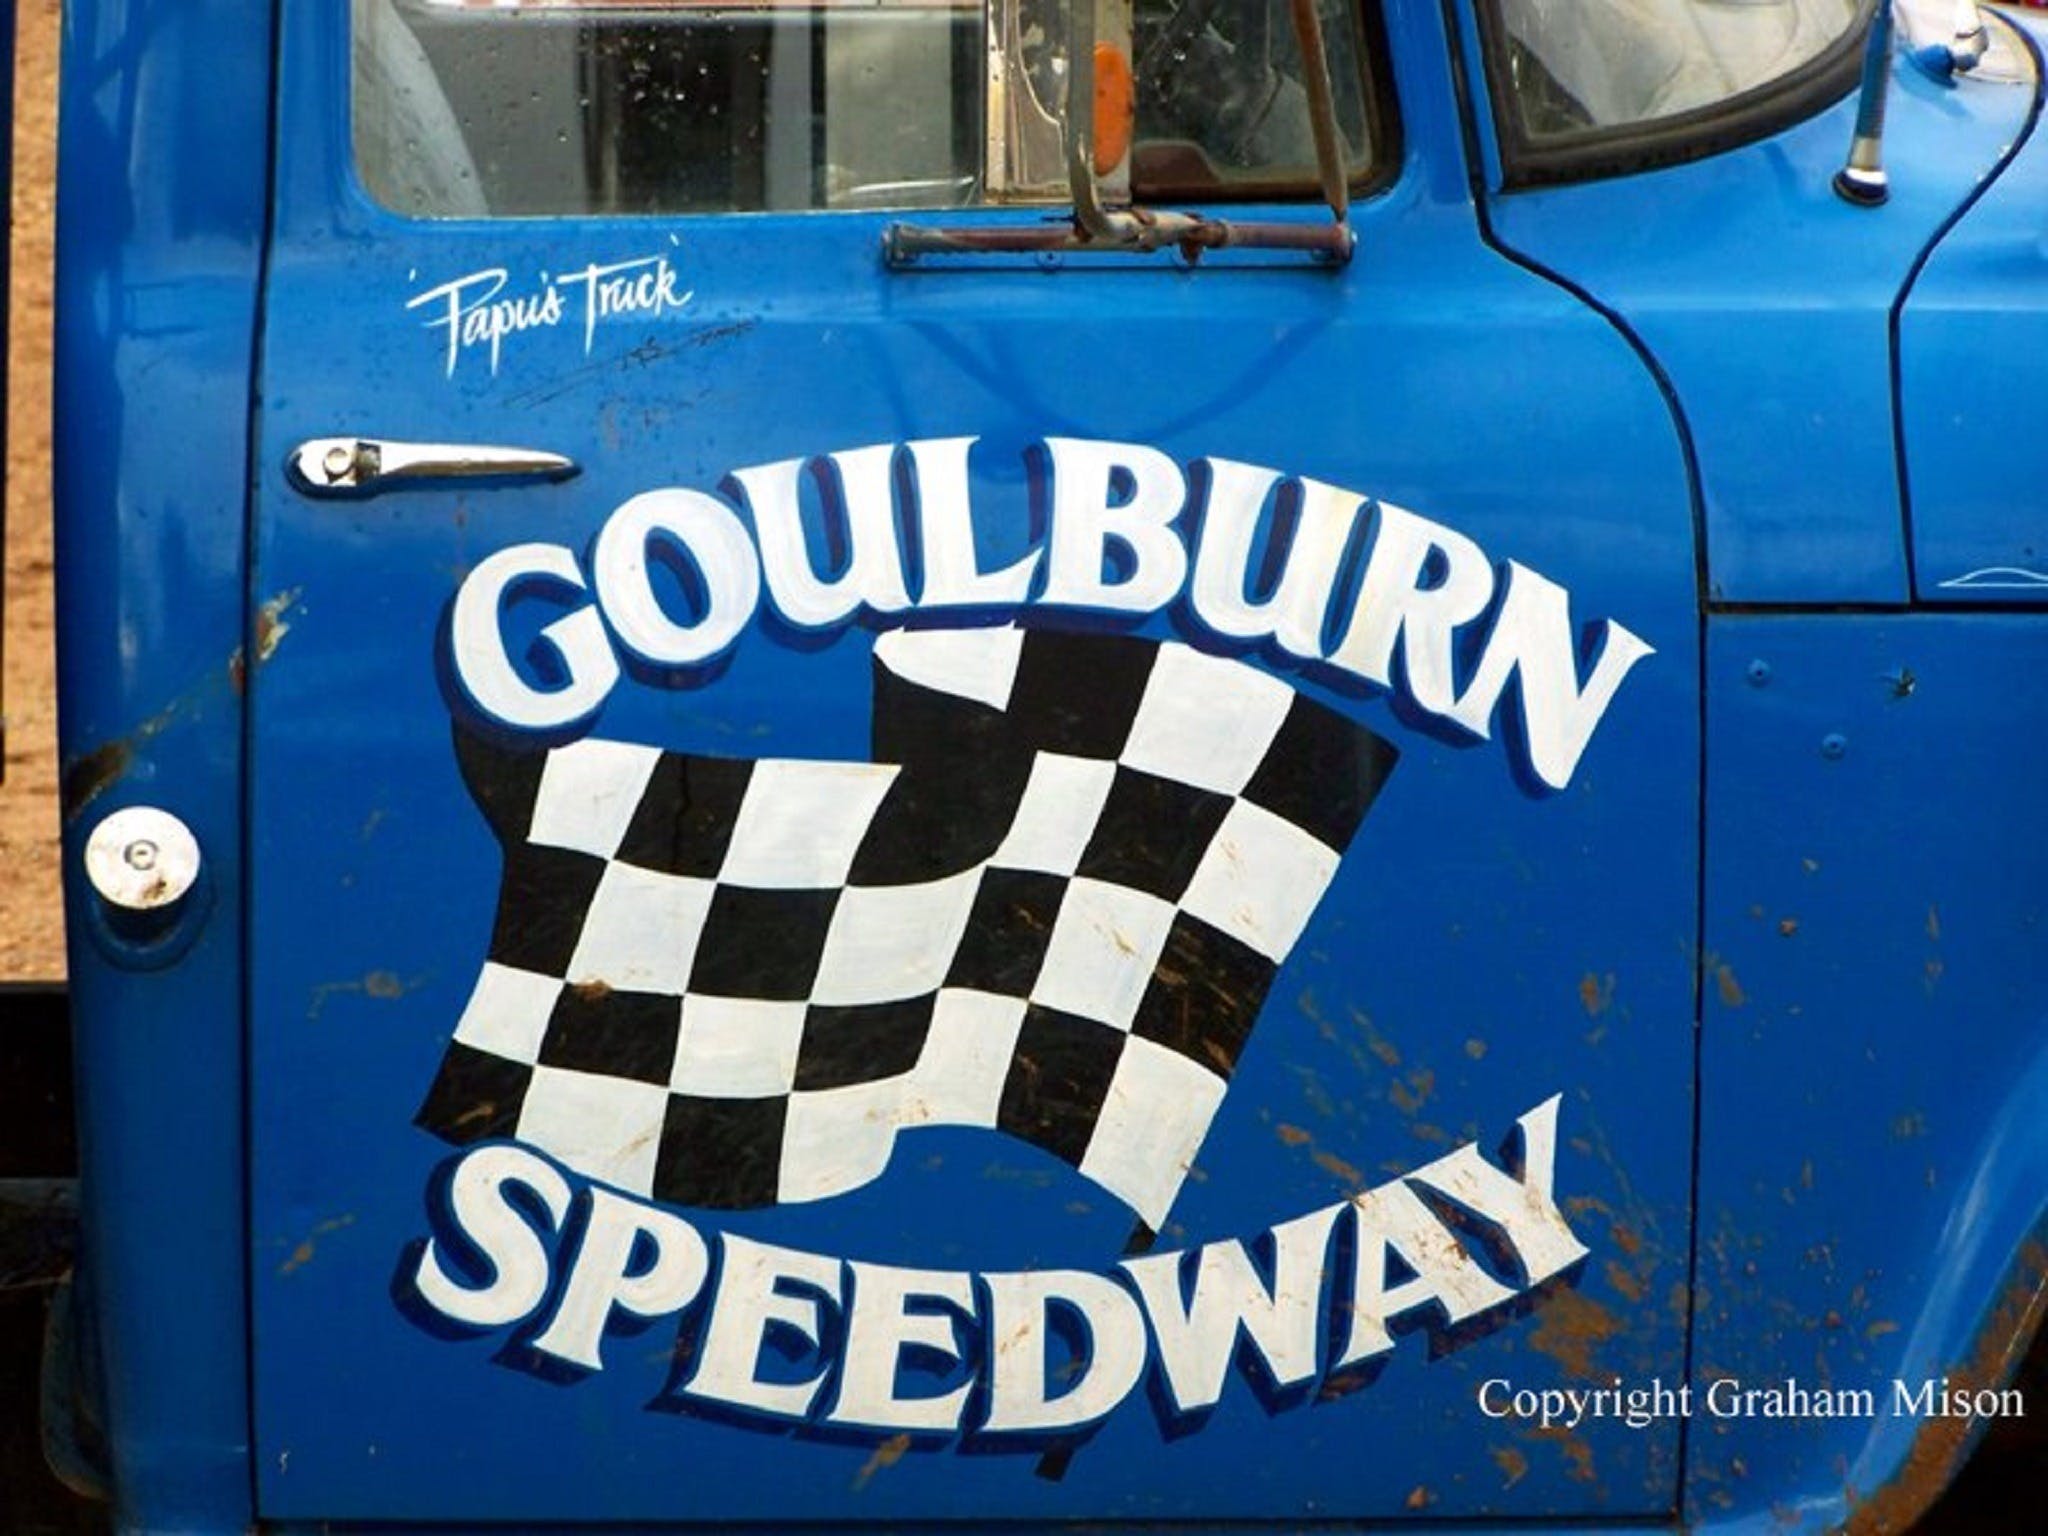 50 years of racing at Goulburn Speedway - Yamba Accommodation